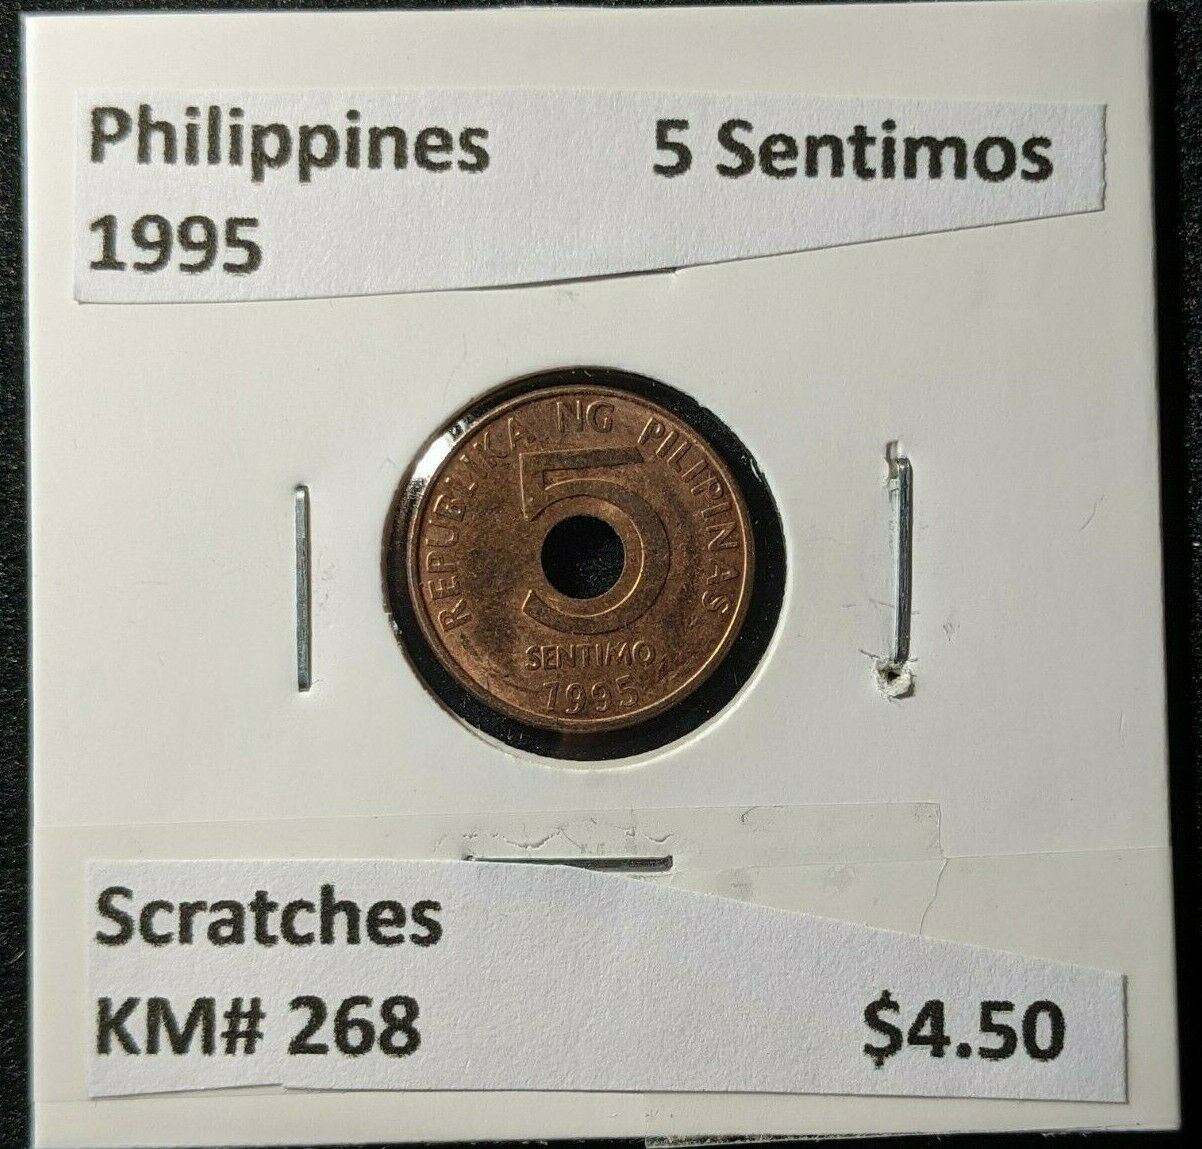 Philippines 1995 5 Sentimos KM# 268 Scratches #1820